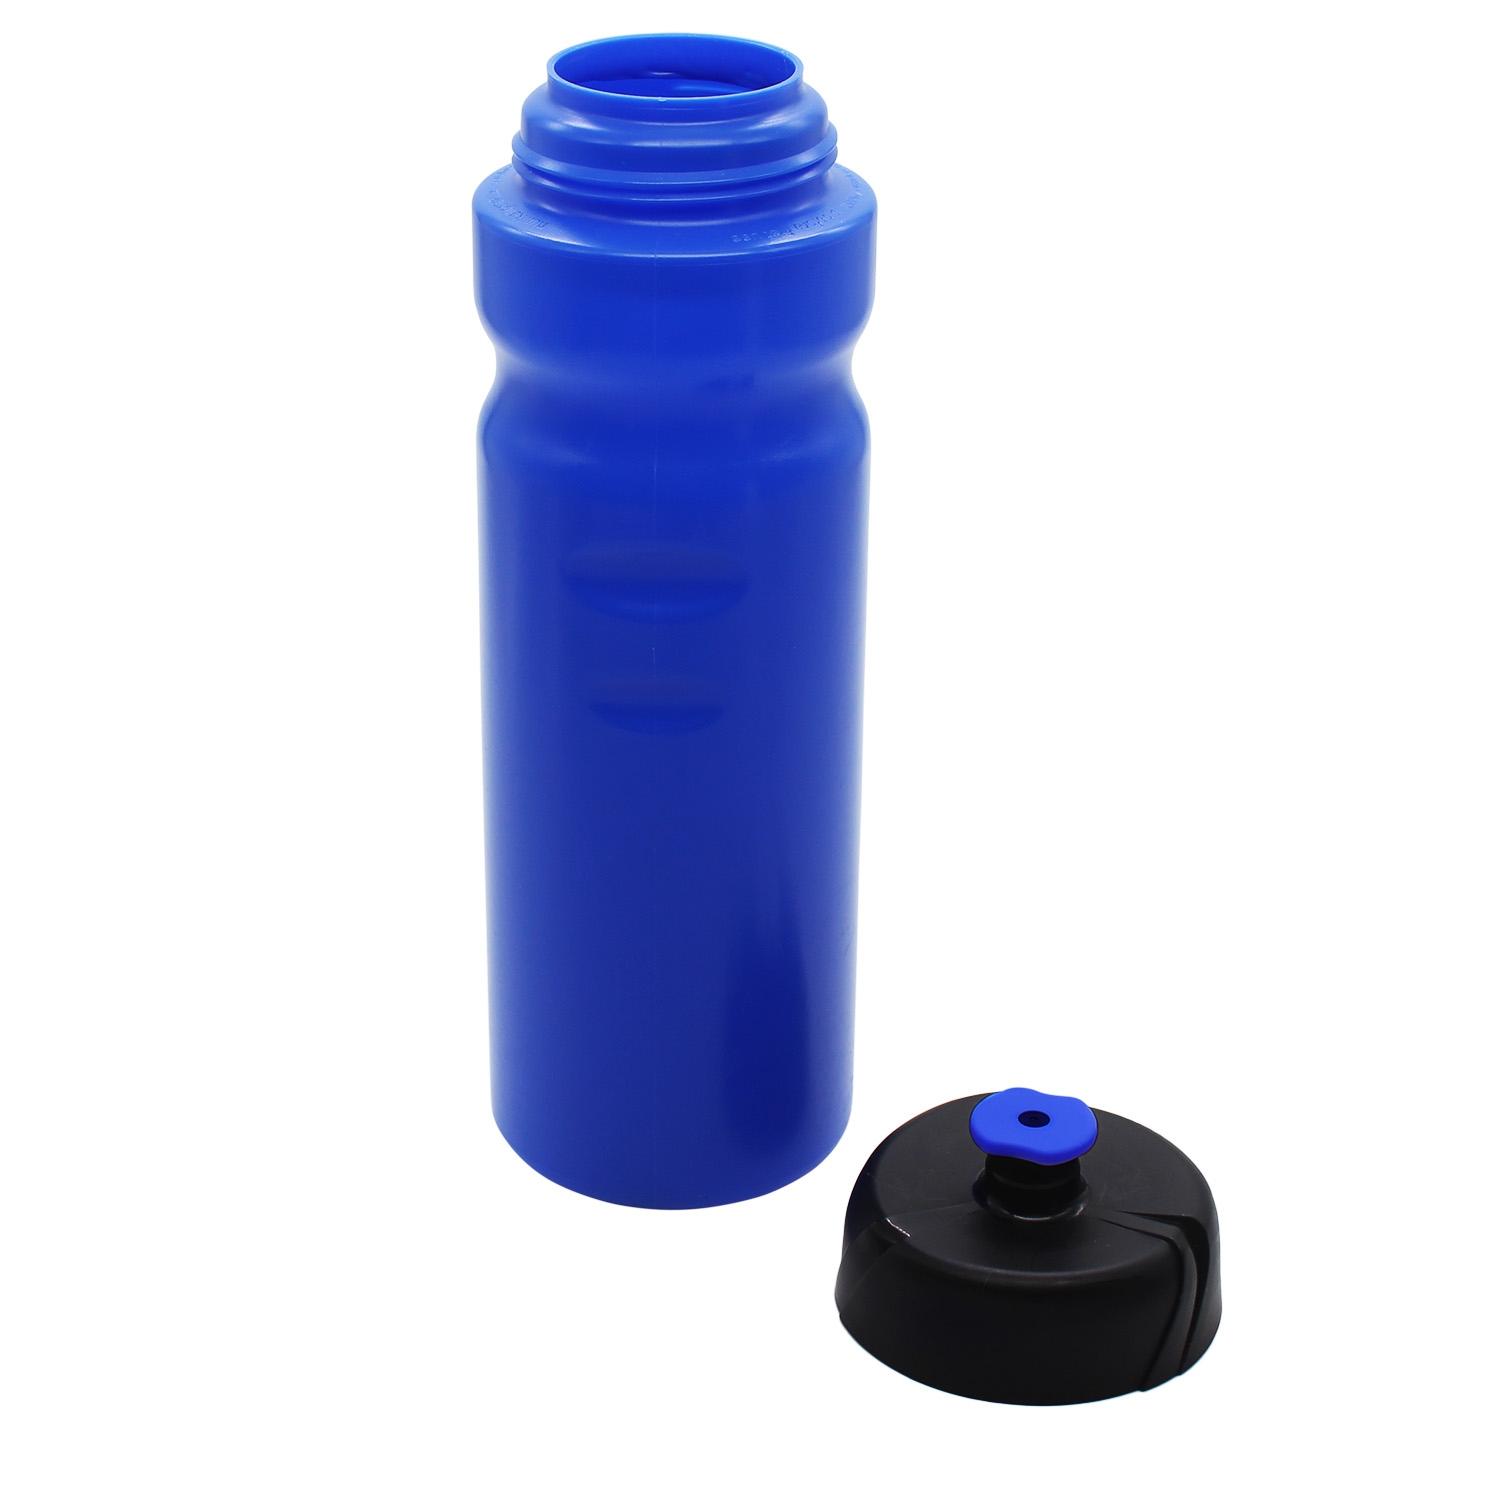 Бутылка для напитков Active Blue line, 750 мл (синяя), синий, пластик